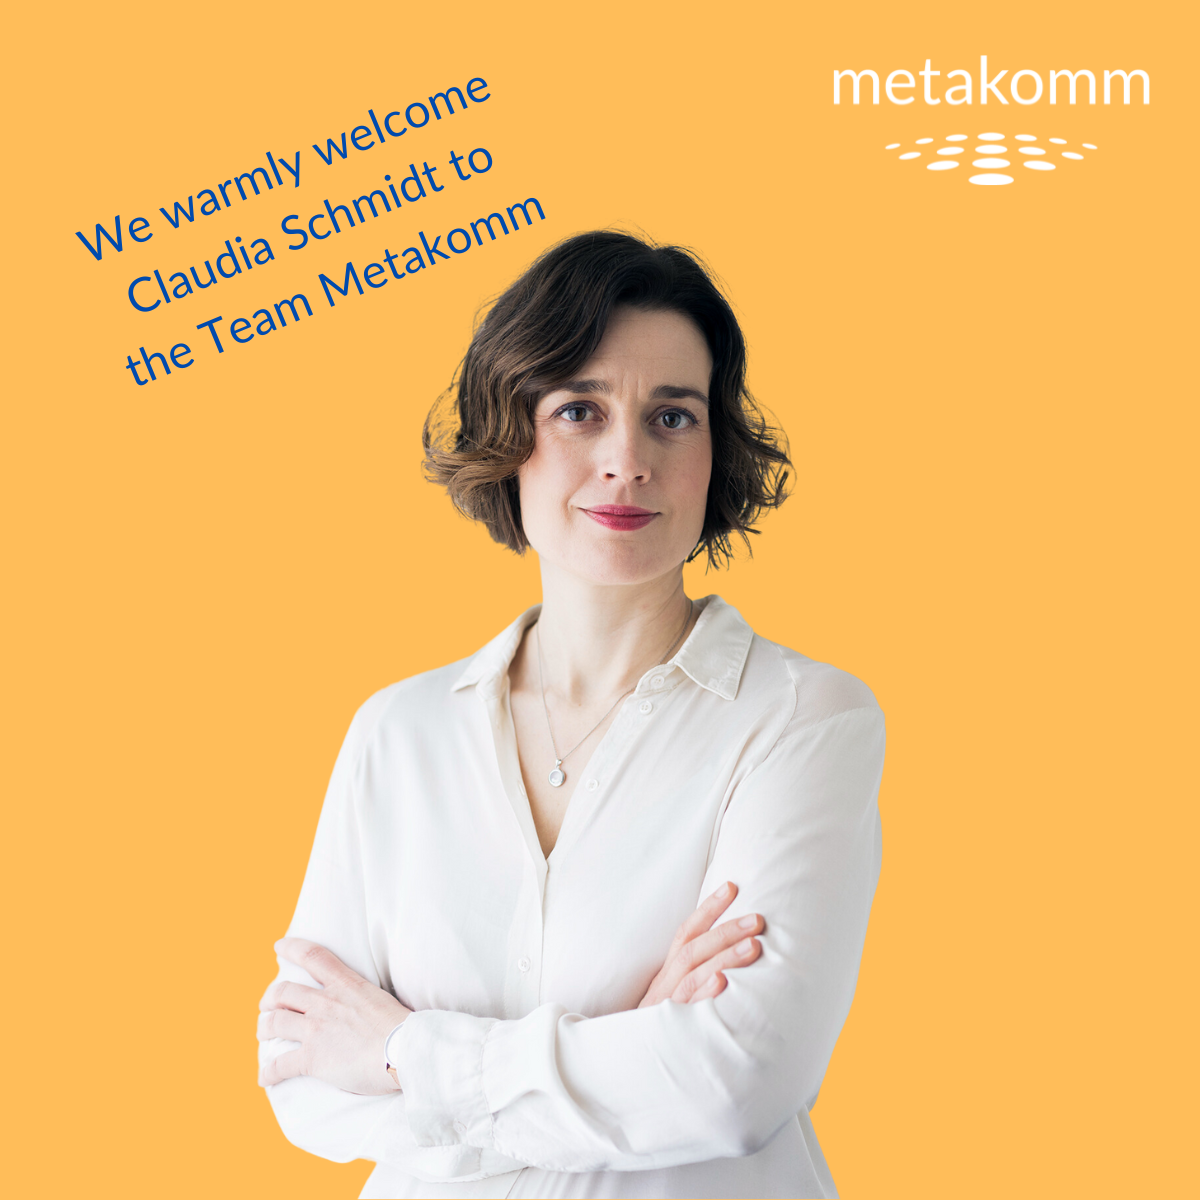 Claudia Schmidt, new consultant in Team Metakomm